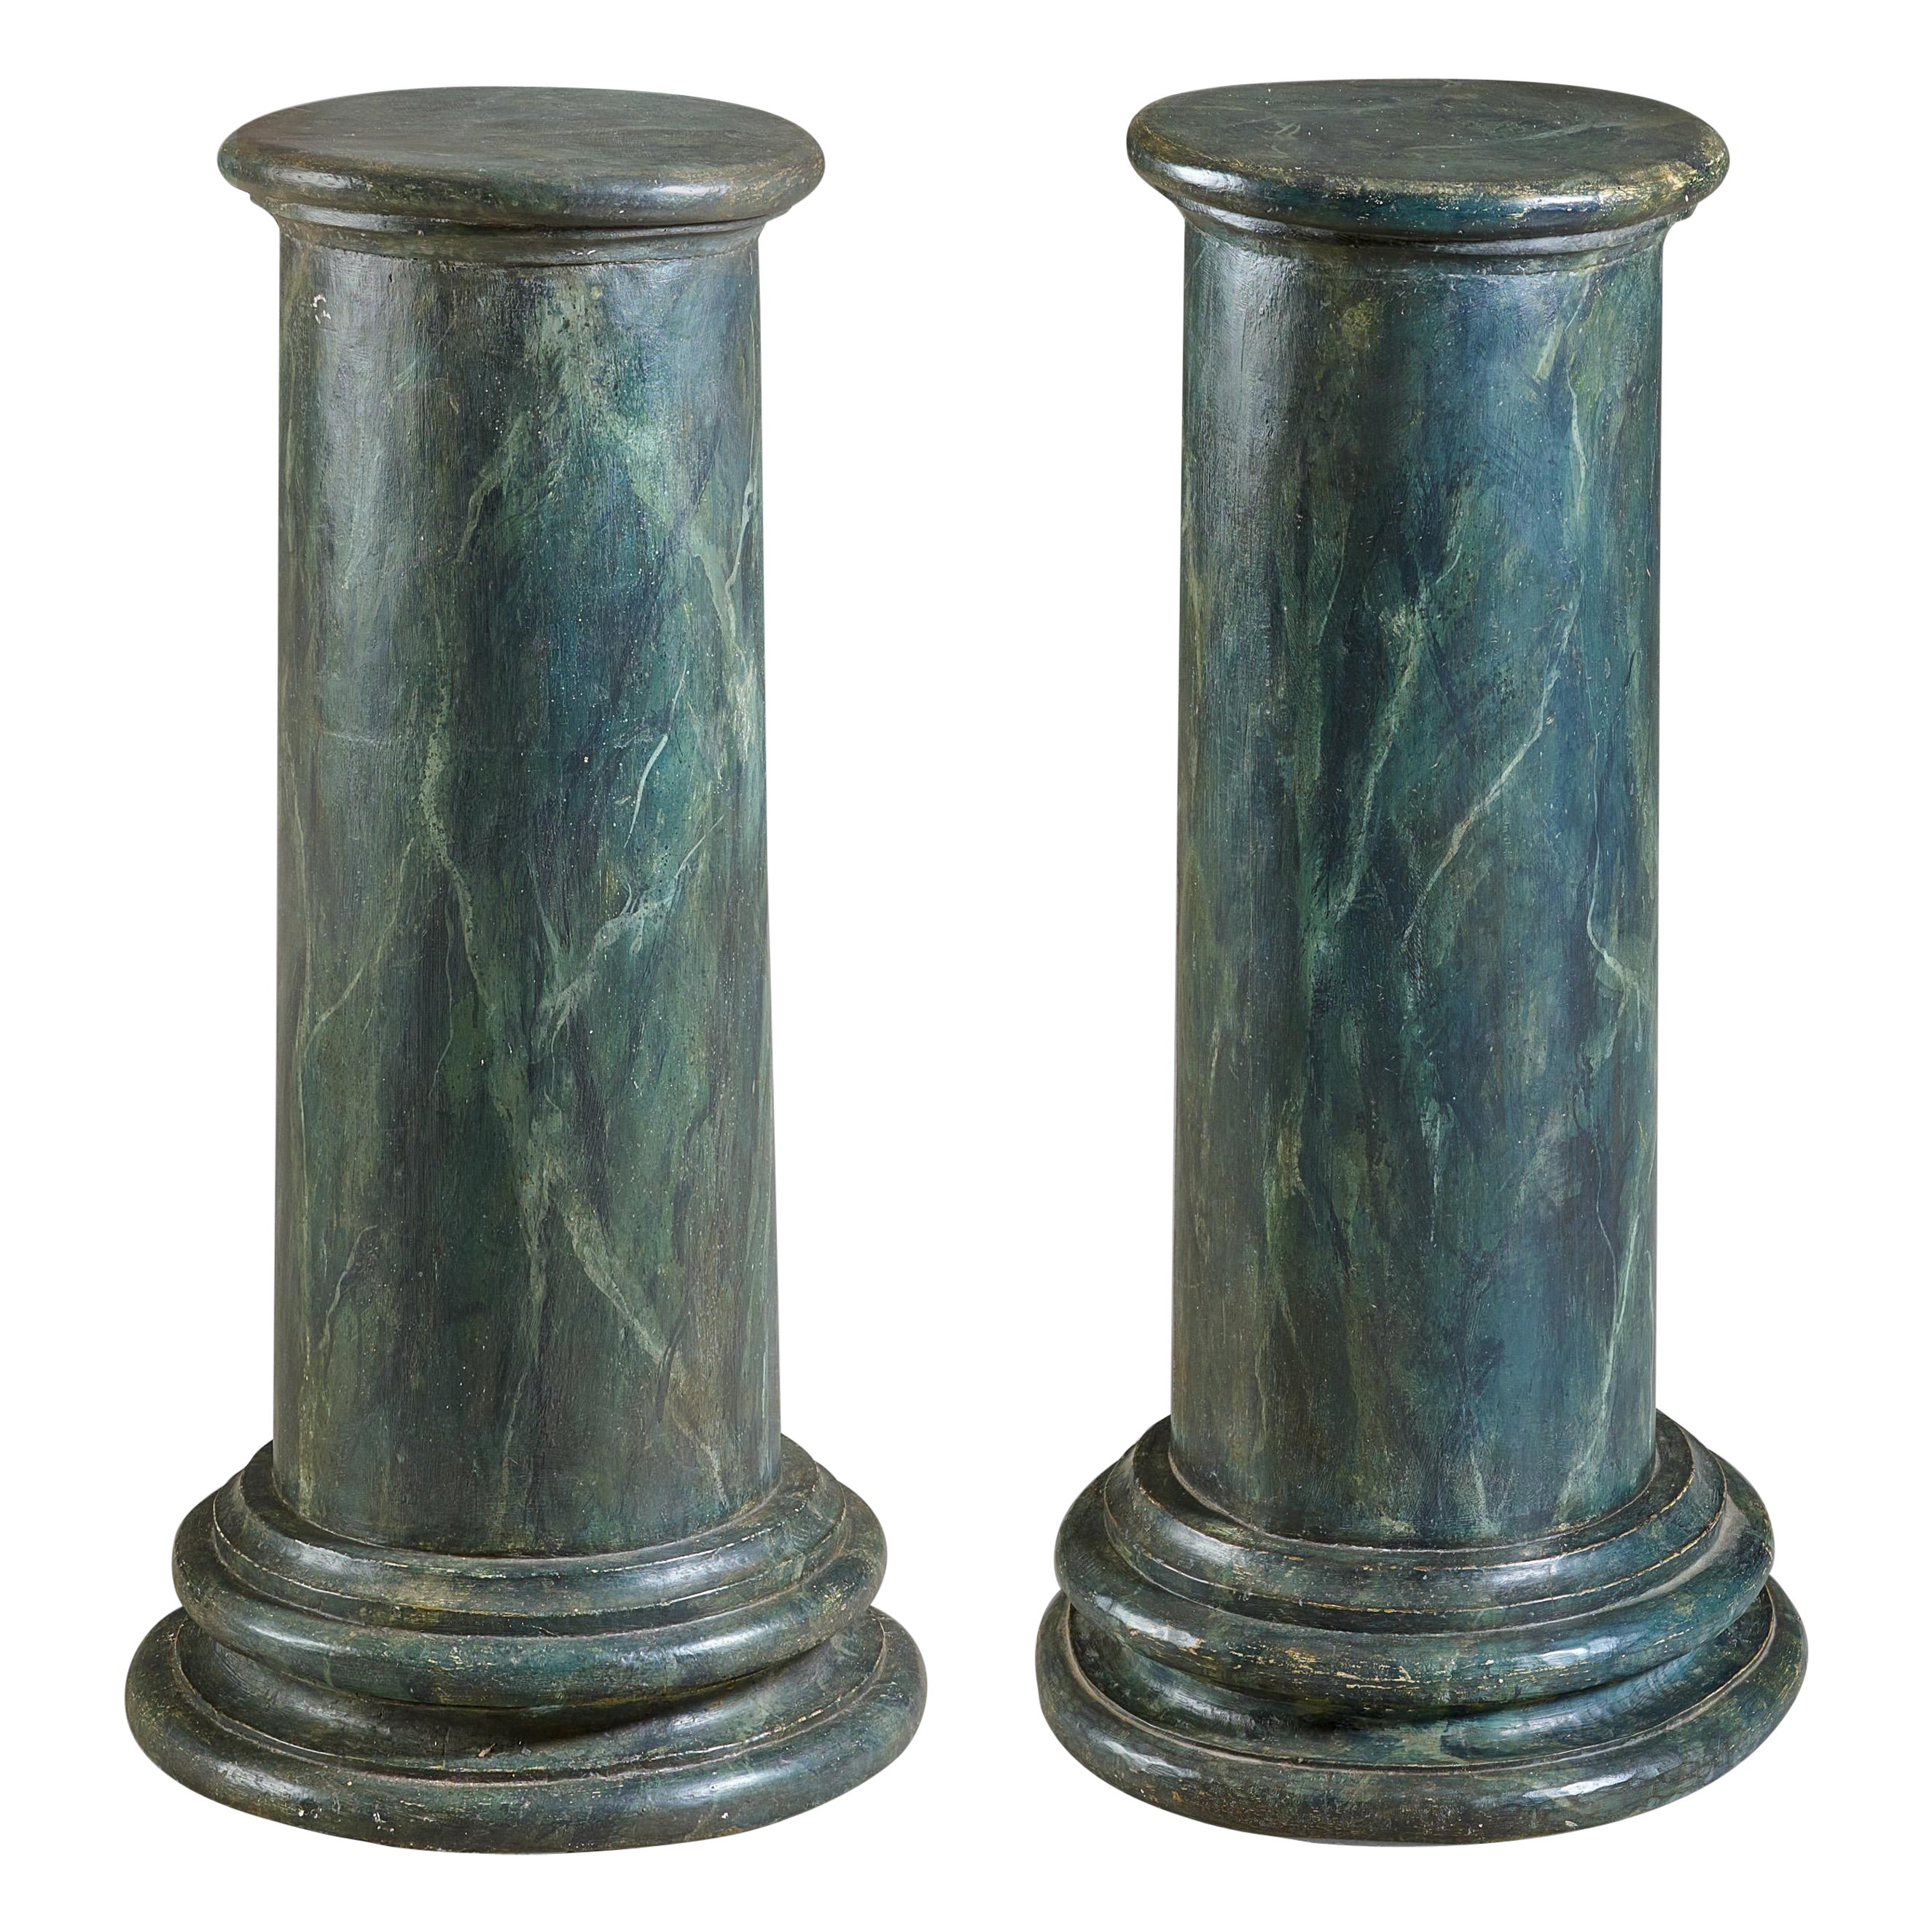 Pair of Classic Painted Pedestals